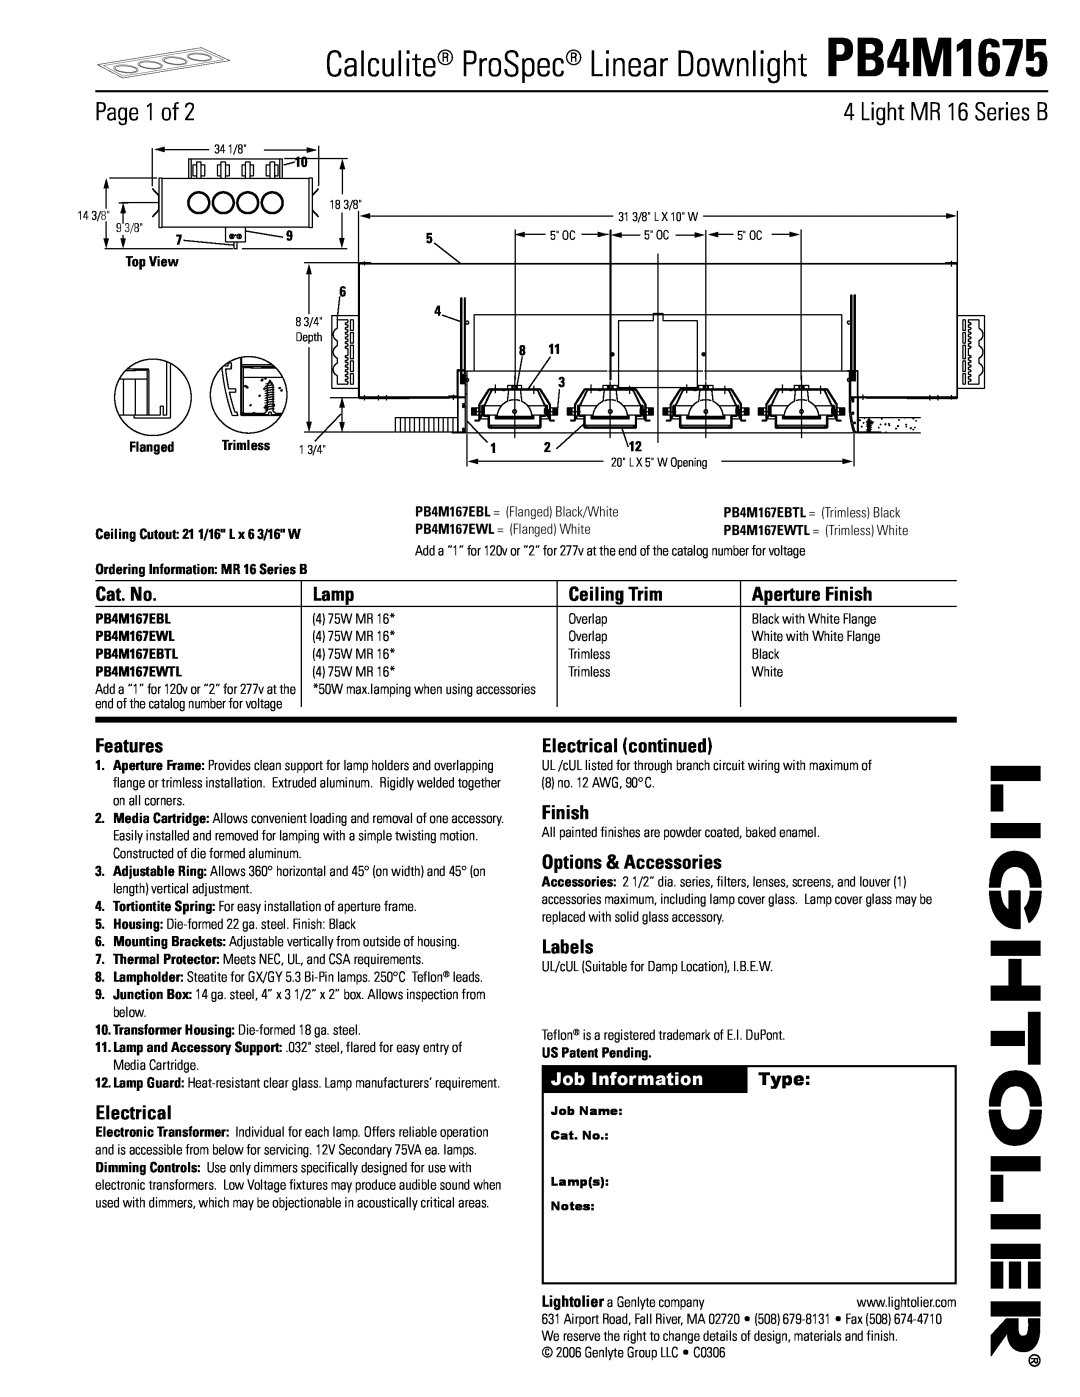 Lightolier manual Page 1 of, Calculite ProSpec Linear Downlight PB4M1675 